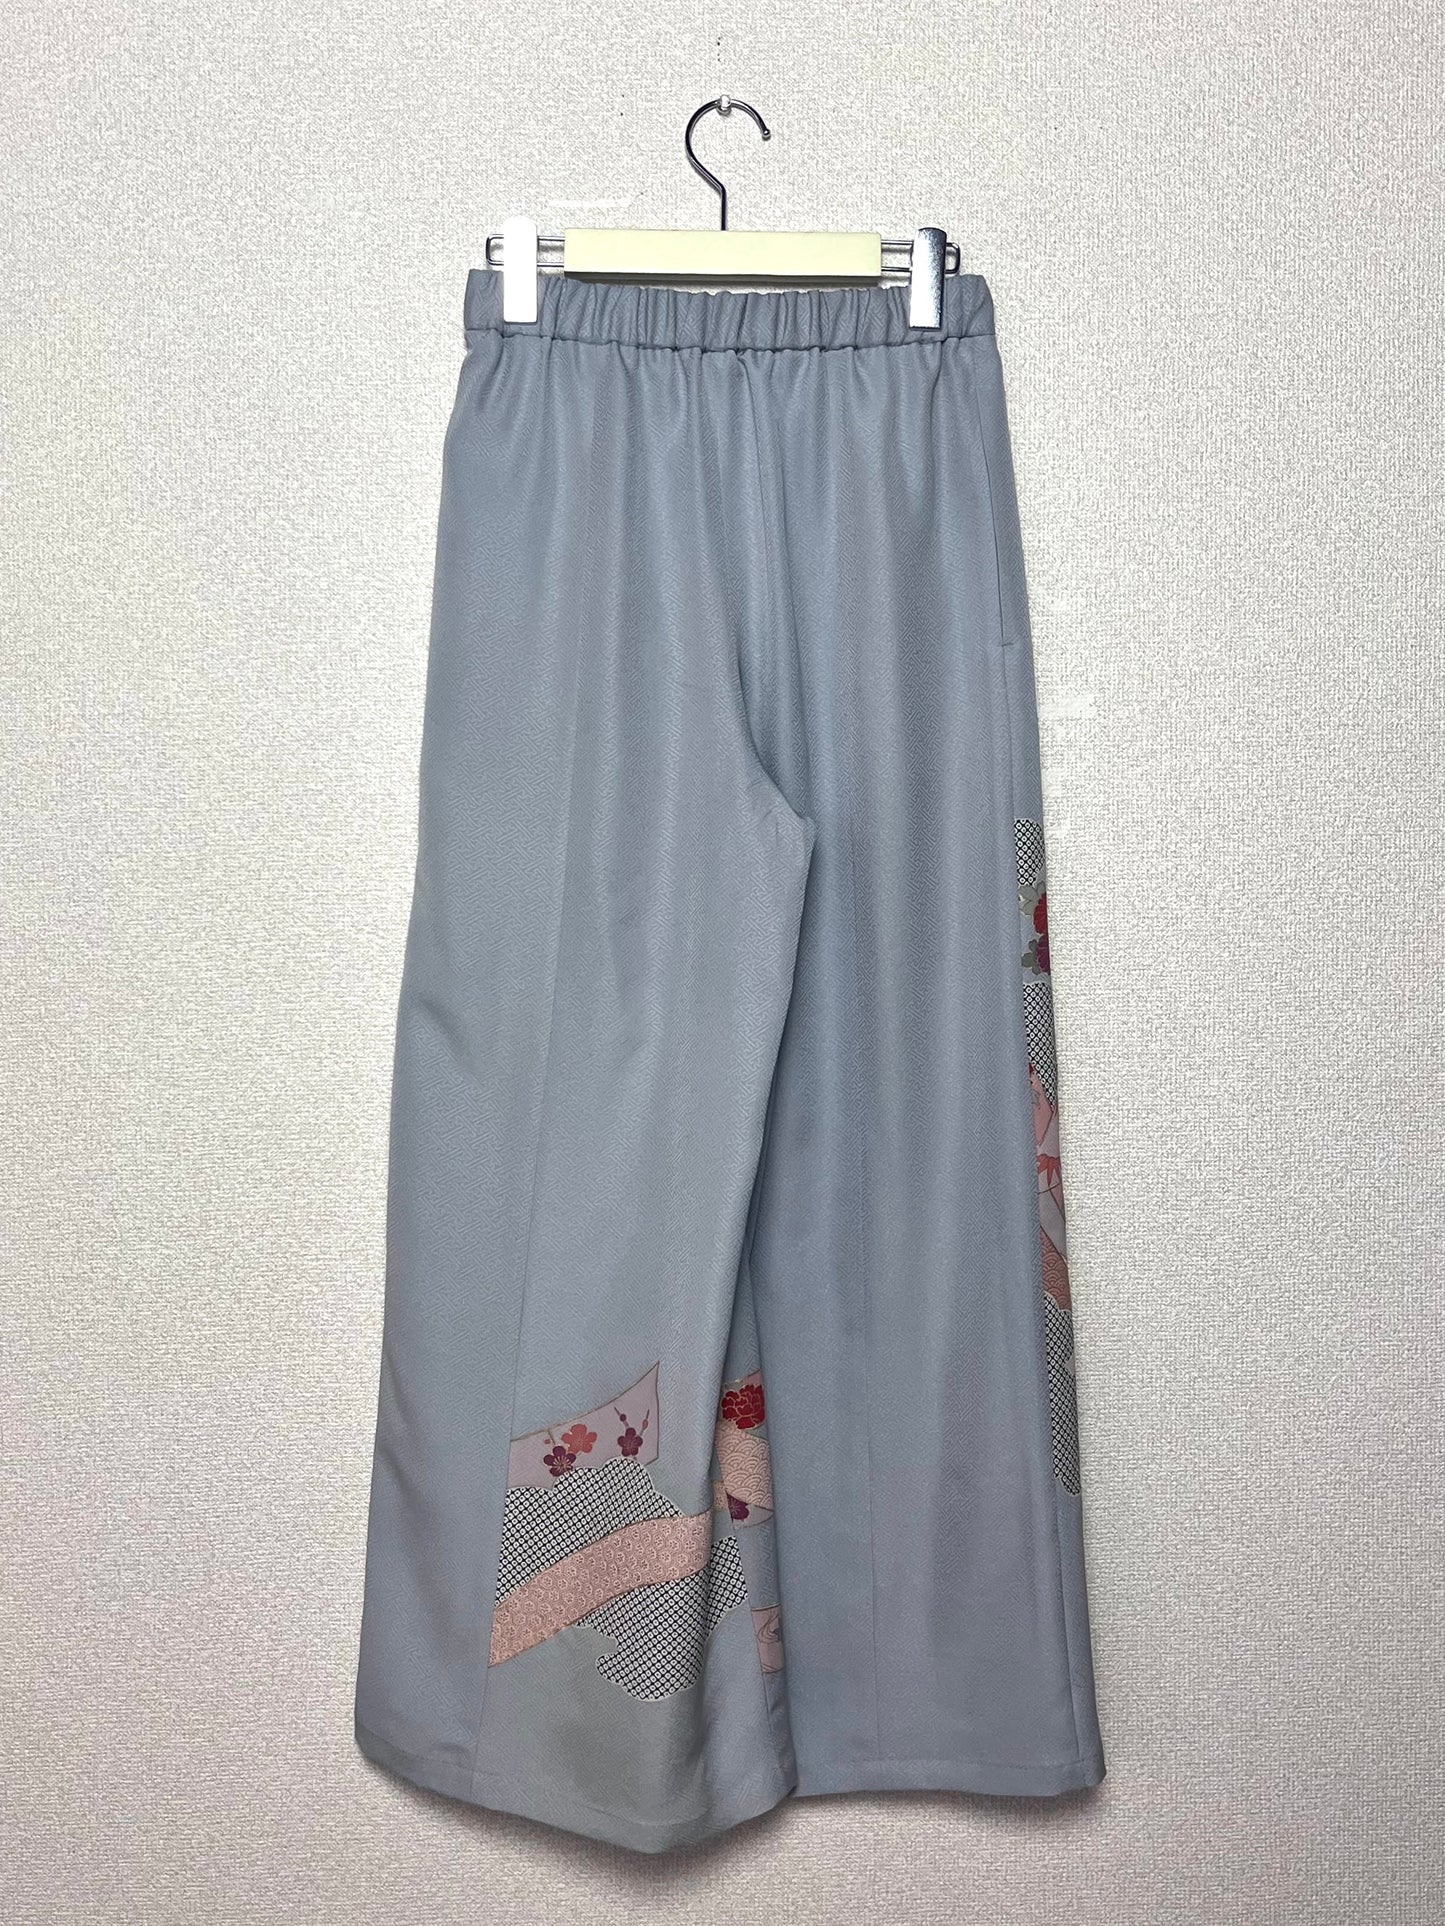 Relax KIMONO wide pants リラックスキモノワイドパンツ TUPT1L015 付け下げ